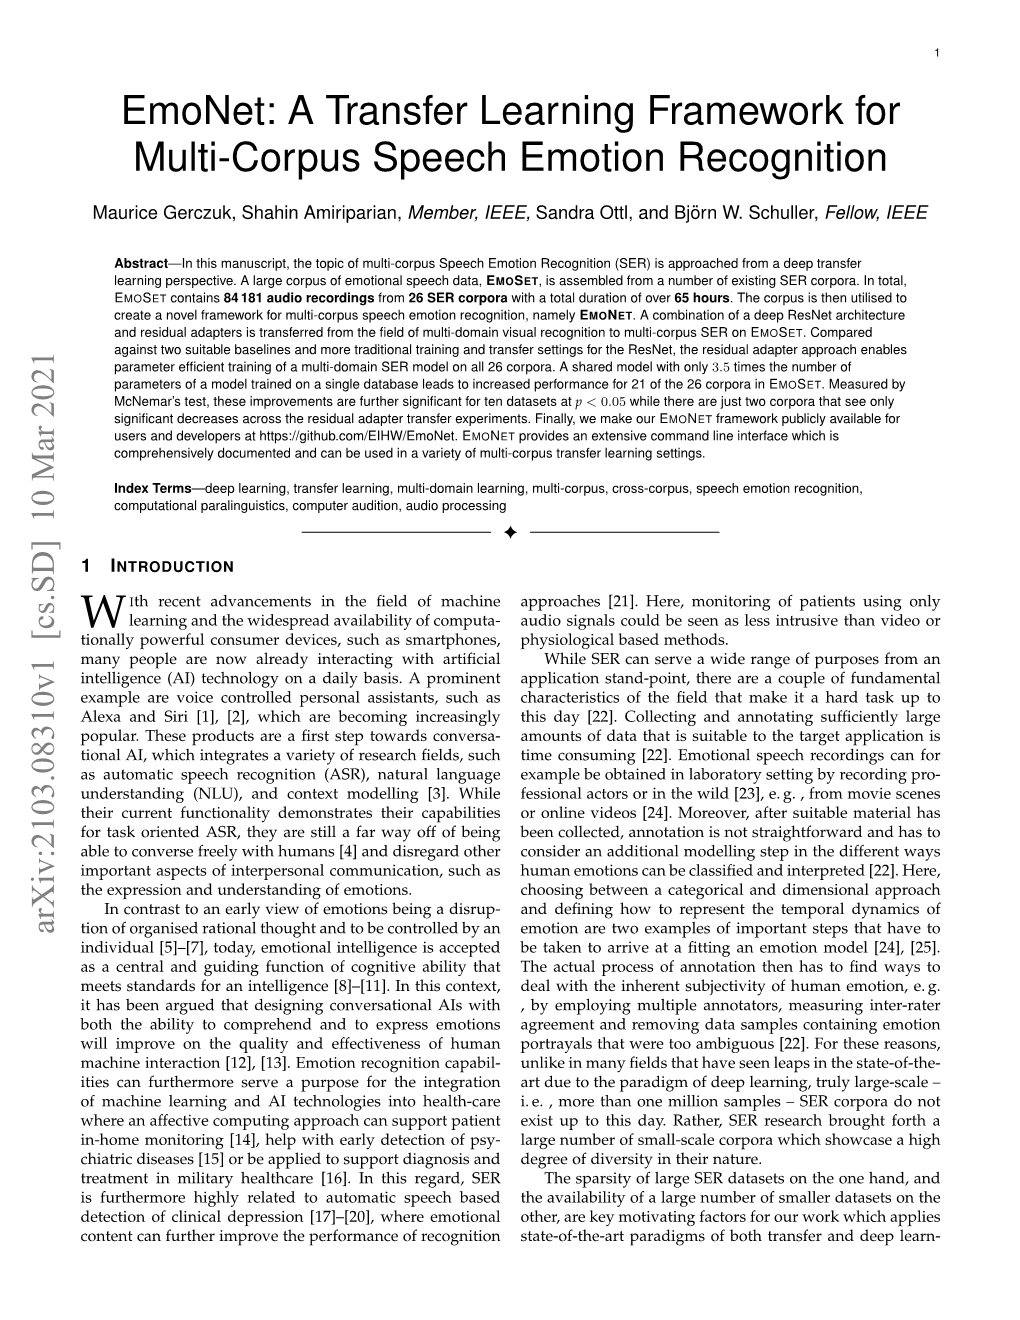 A Transfer Learning Framework for Multi-Corpus Speech Emotion Recognition